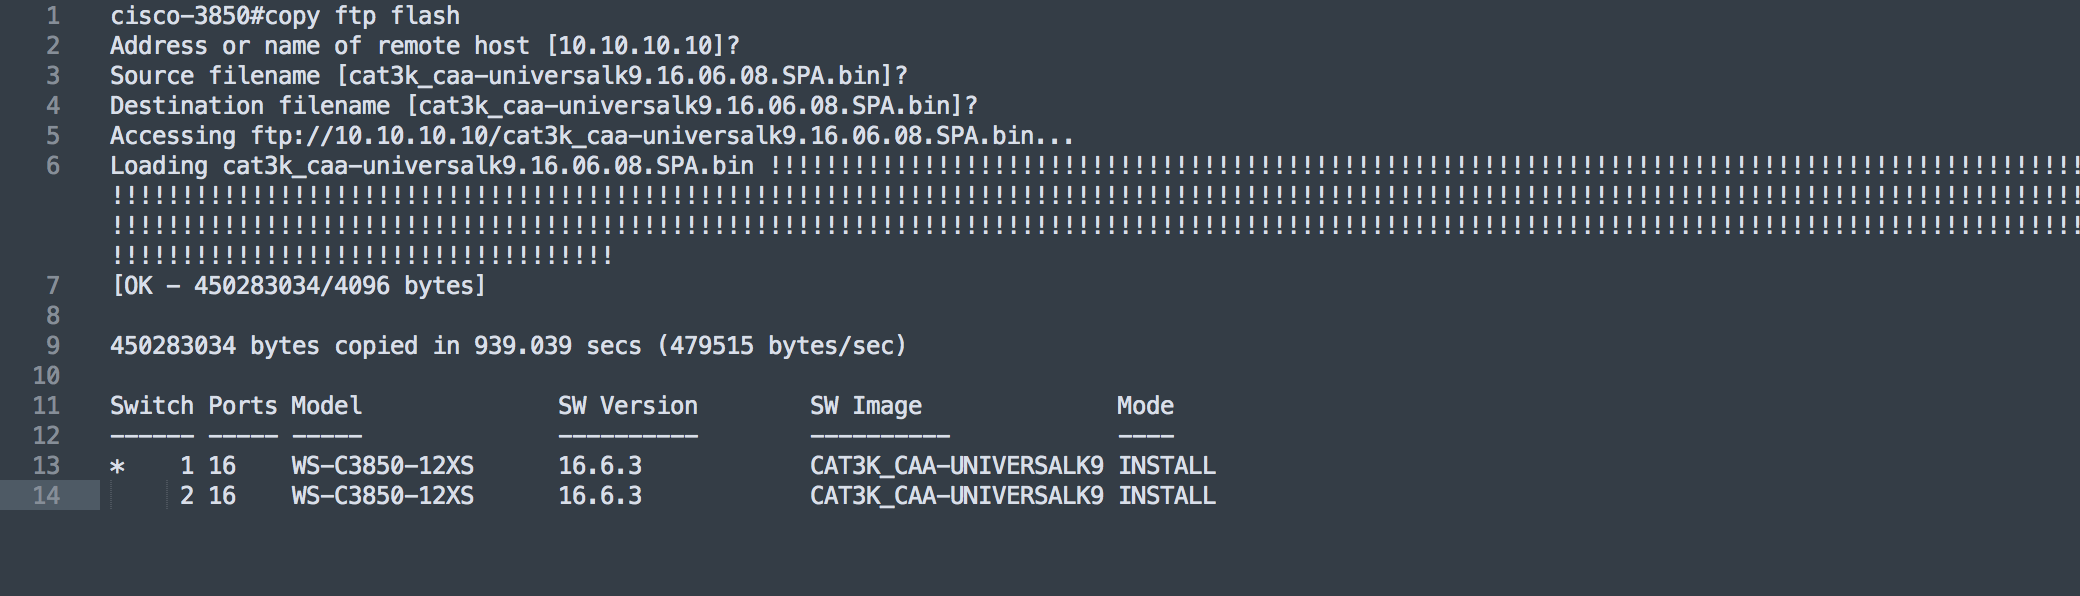 Cisco 3560 software upgrade mysql workbench ubuntu 13.04 install